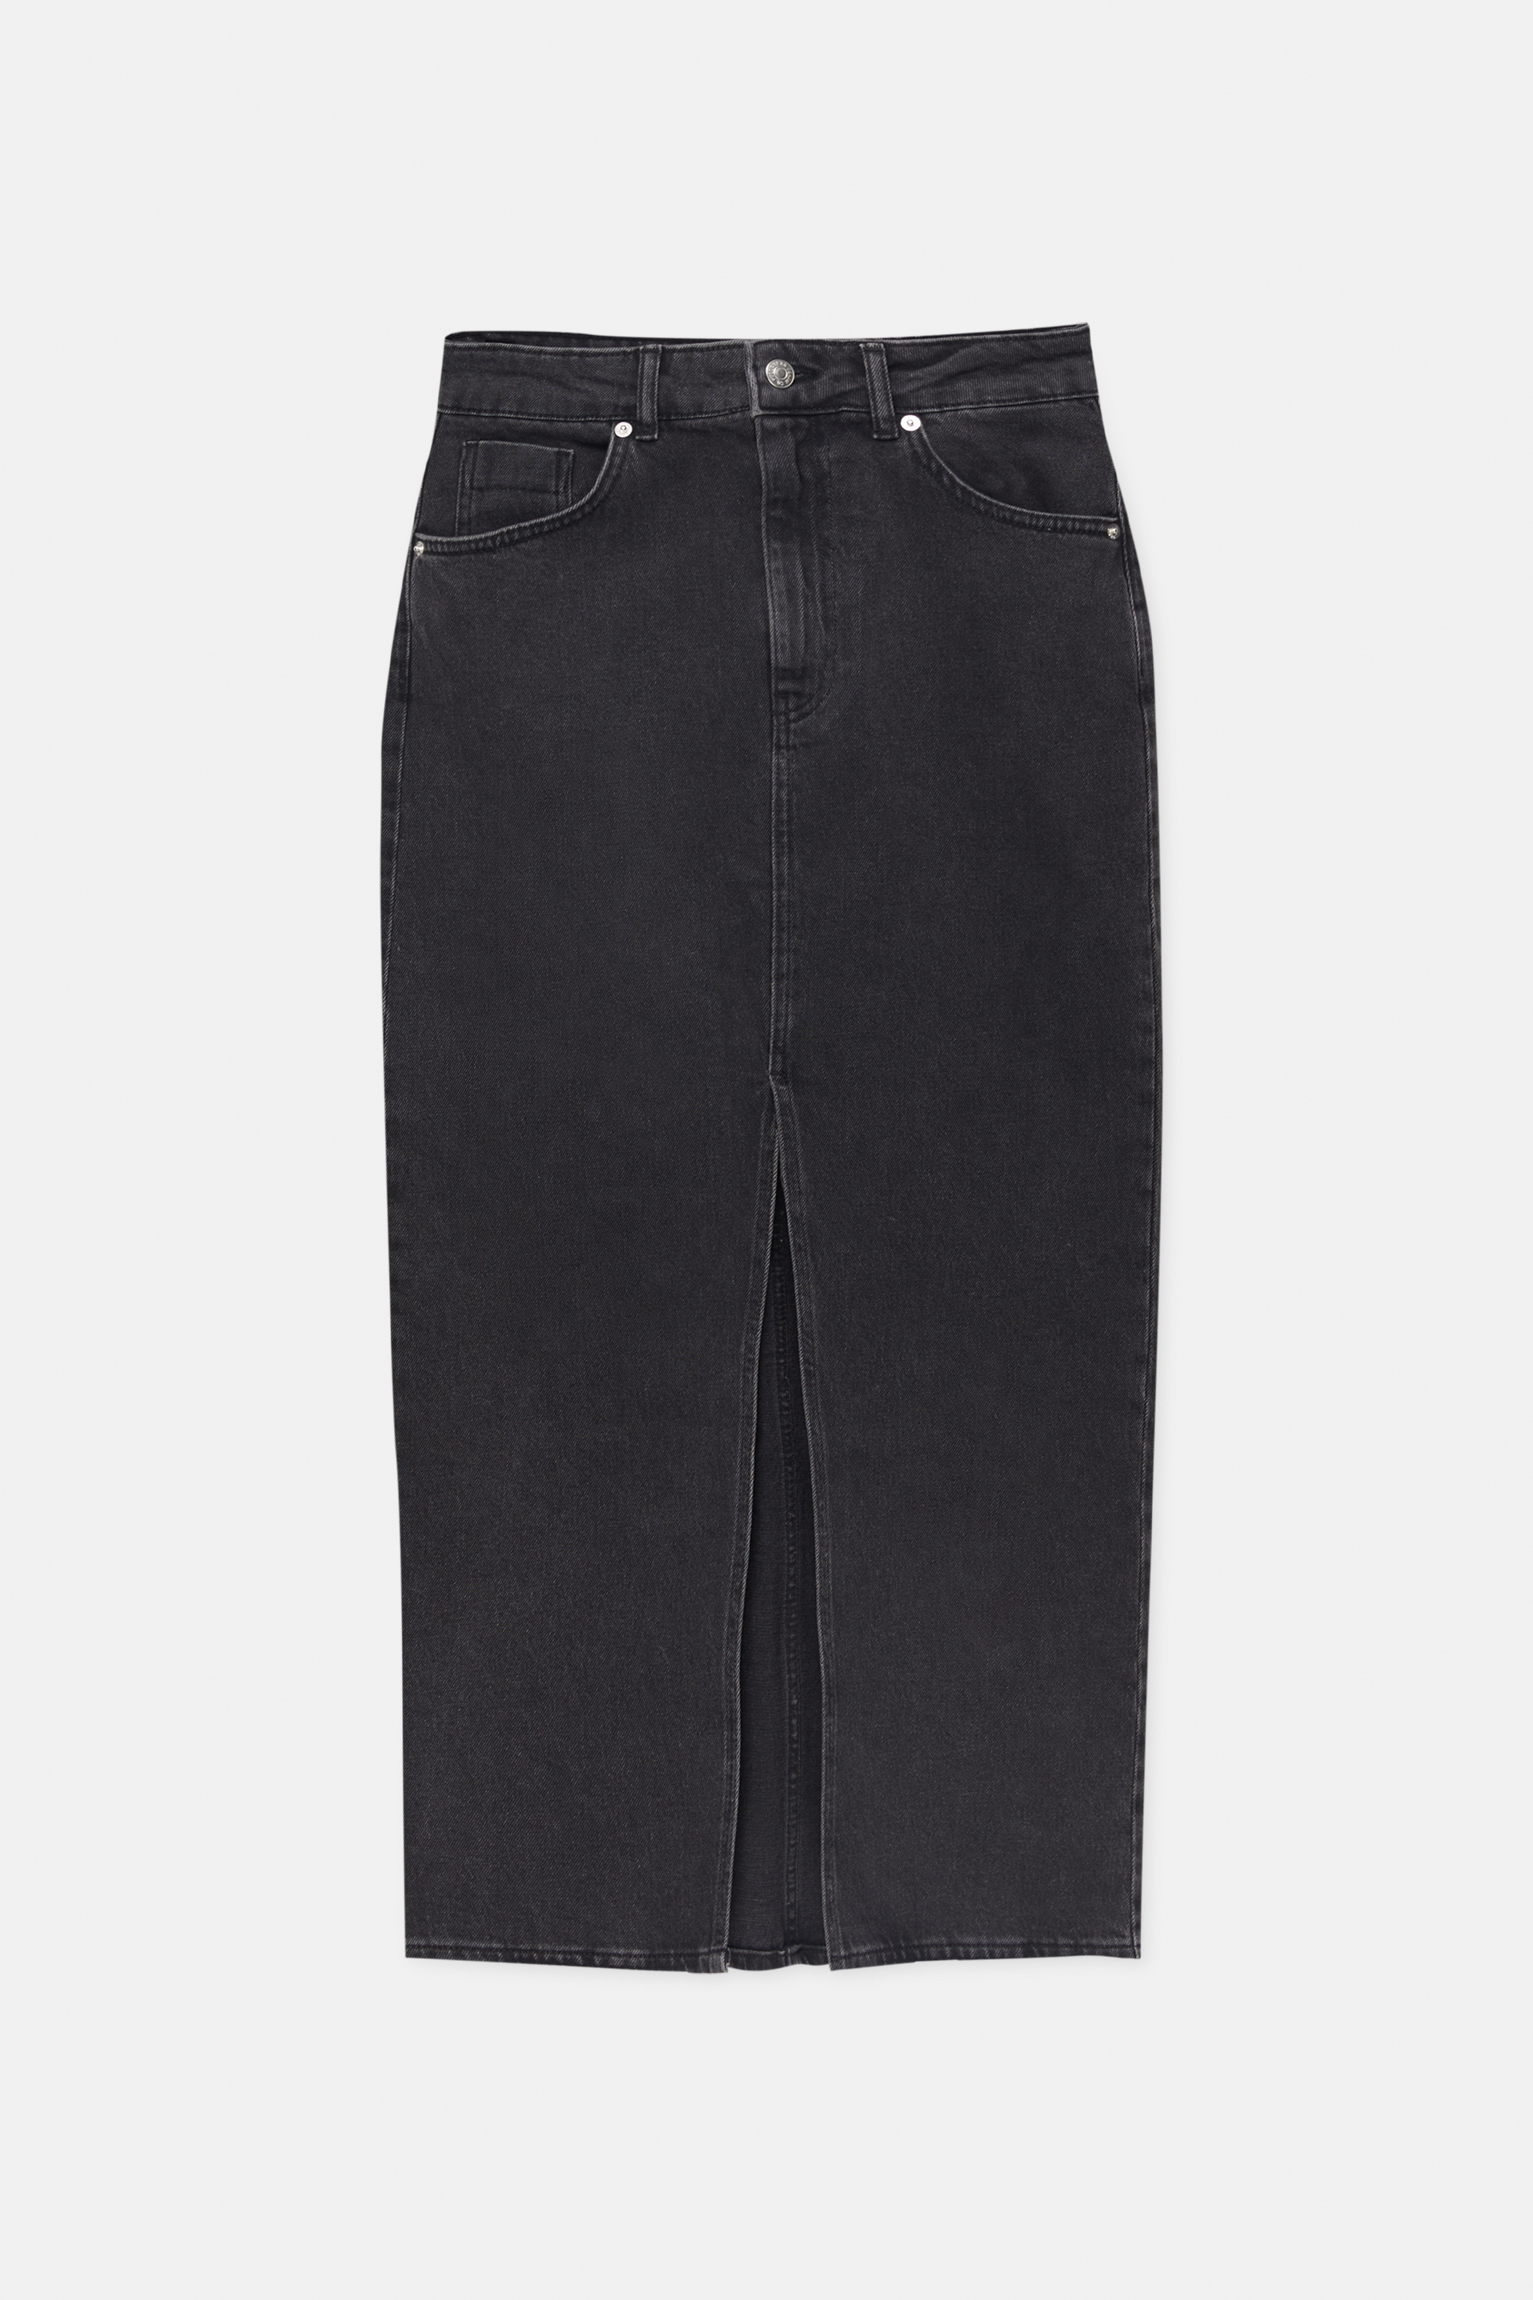 Update more than 132 black jean skirt best